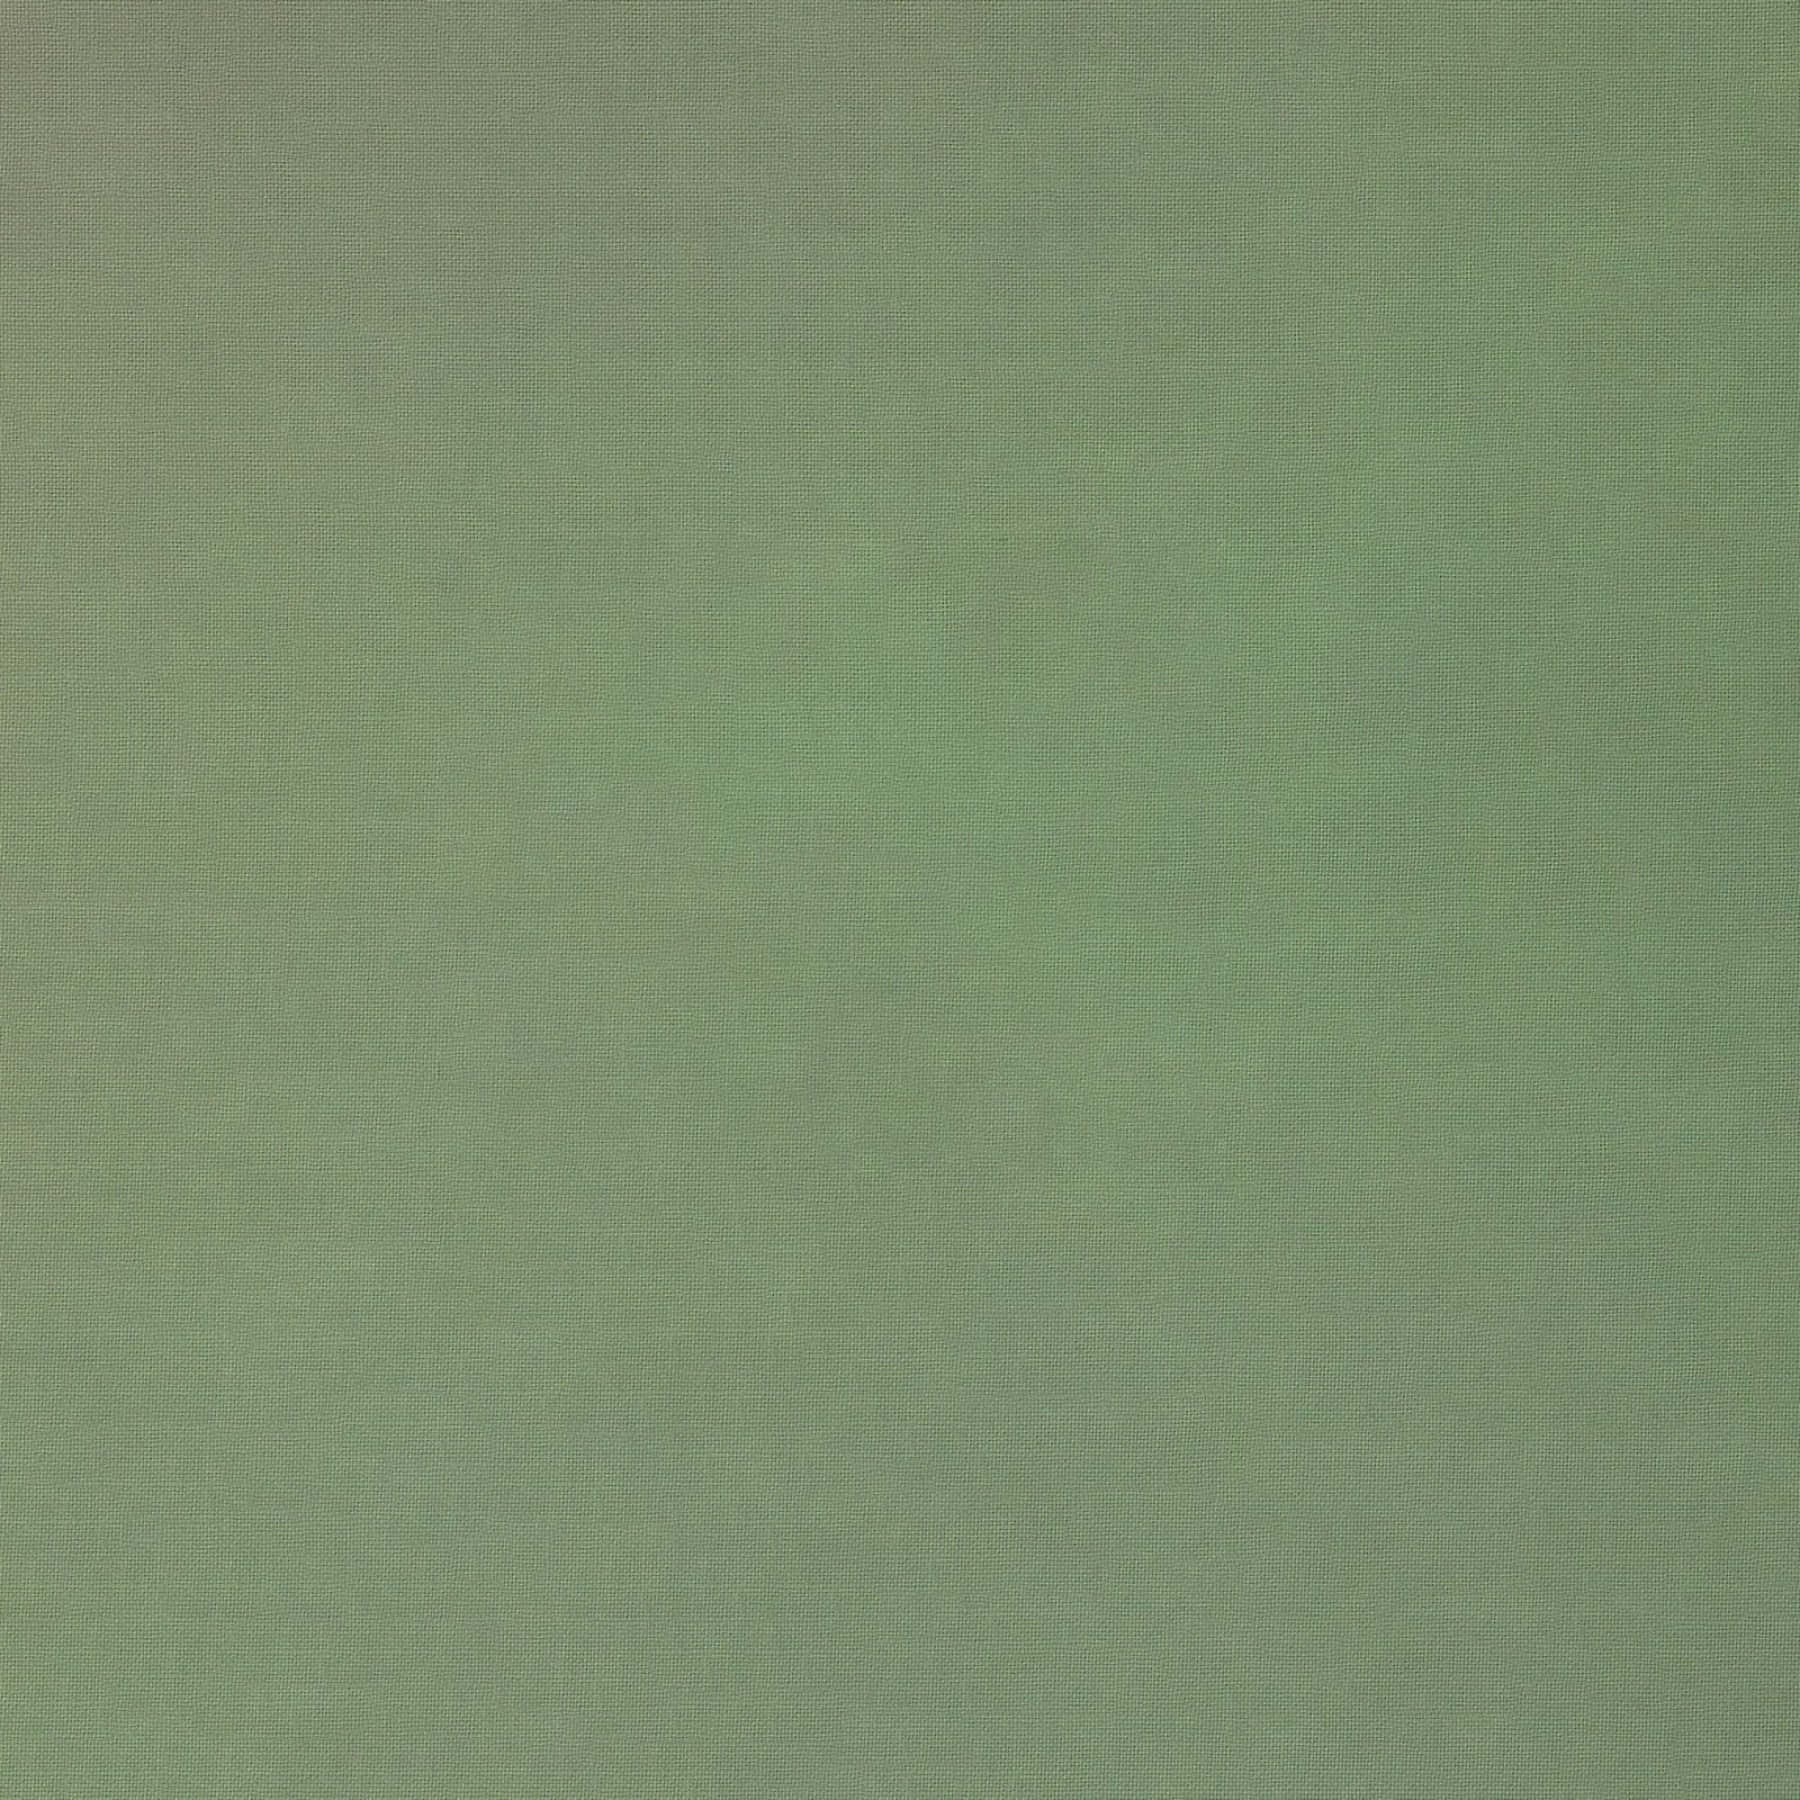 Download Green Texture 1800 X 1800 Wallpaper